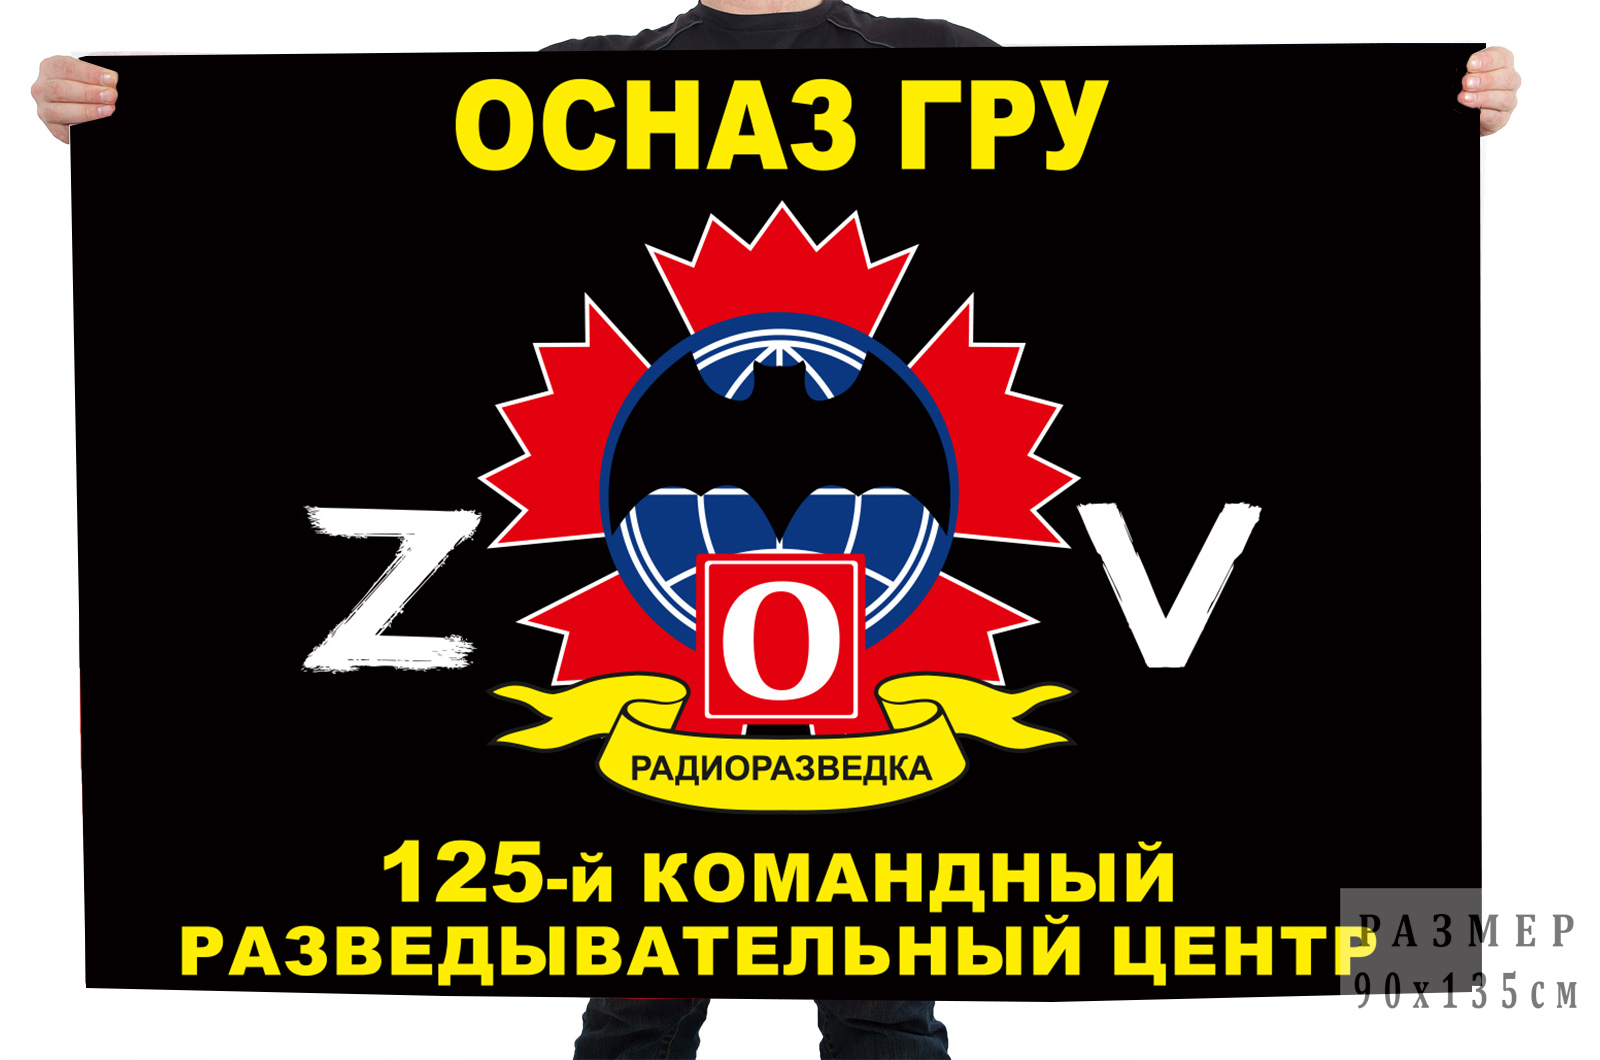 Флаг 125 КРЦ ОсНаз ГРУ "Спецоперация Z"